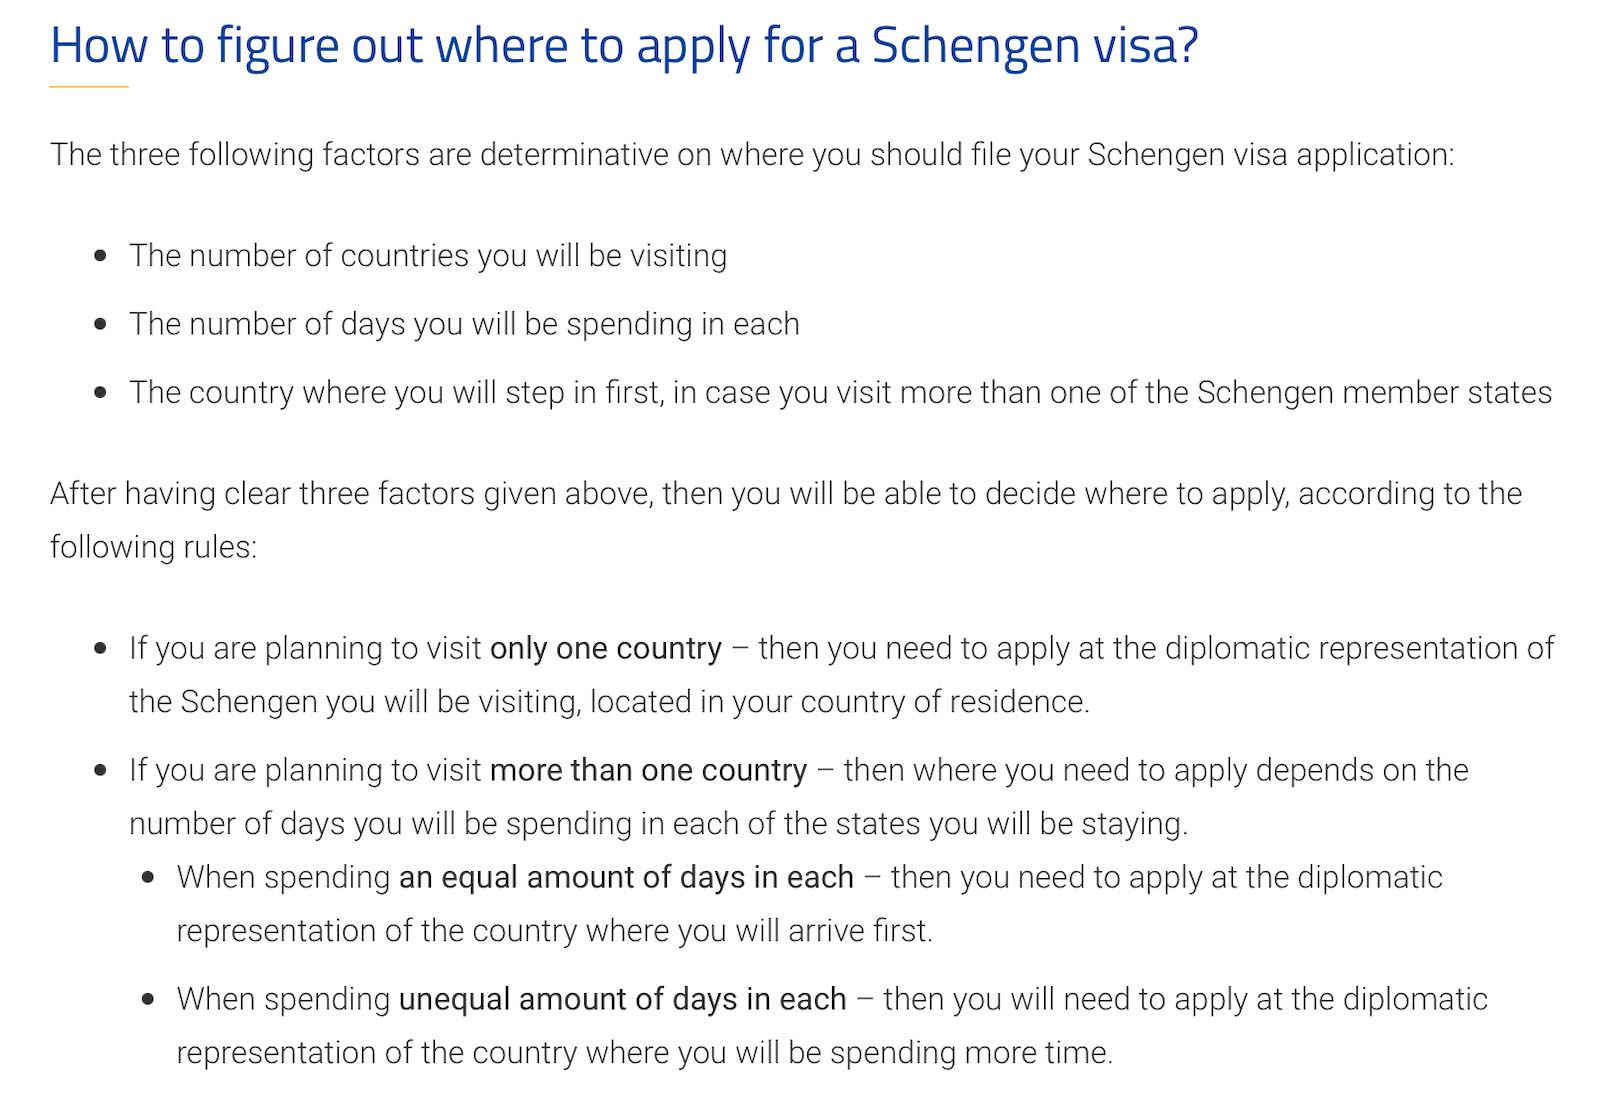 Aturan Di Mana Harus Apply Visa Schengen